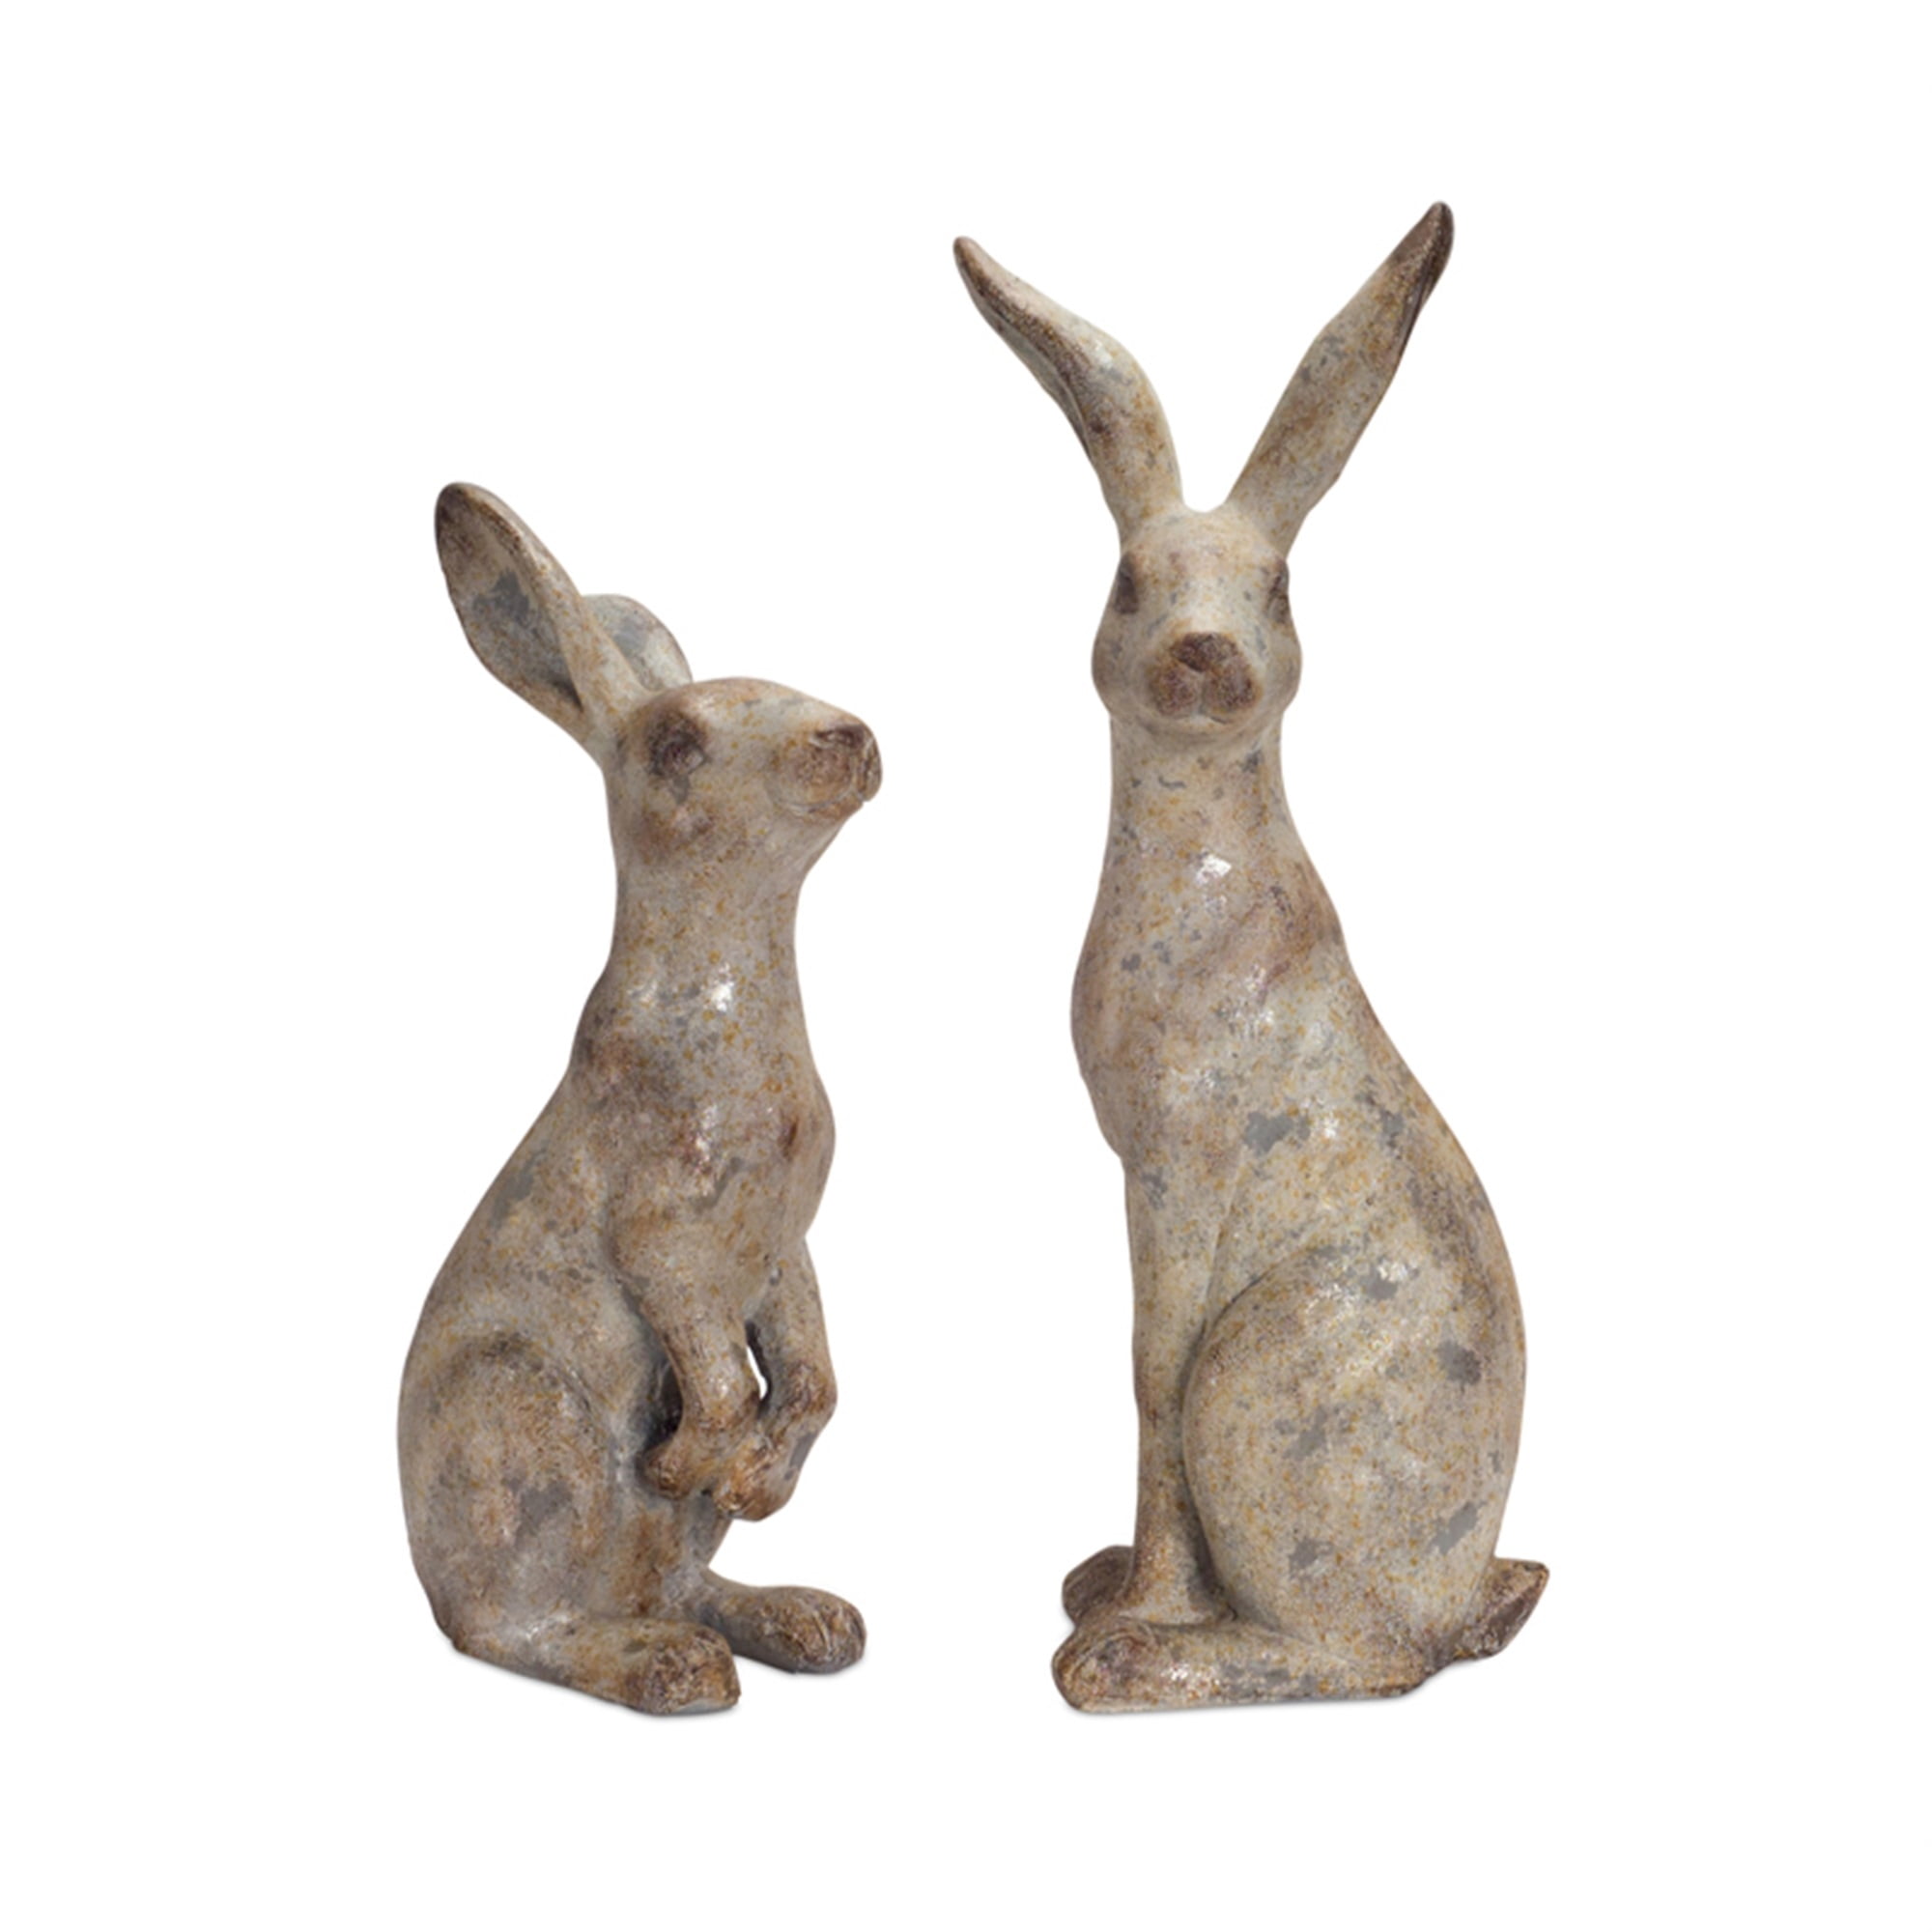 Rabbit (Set of 2) 20"H, 24.5"H Polystone